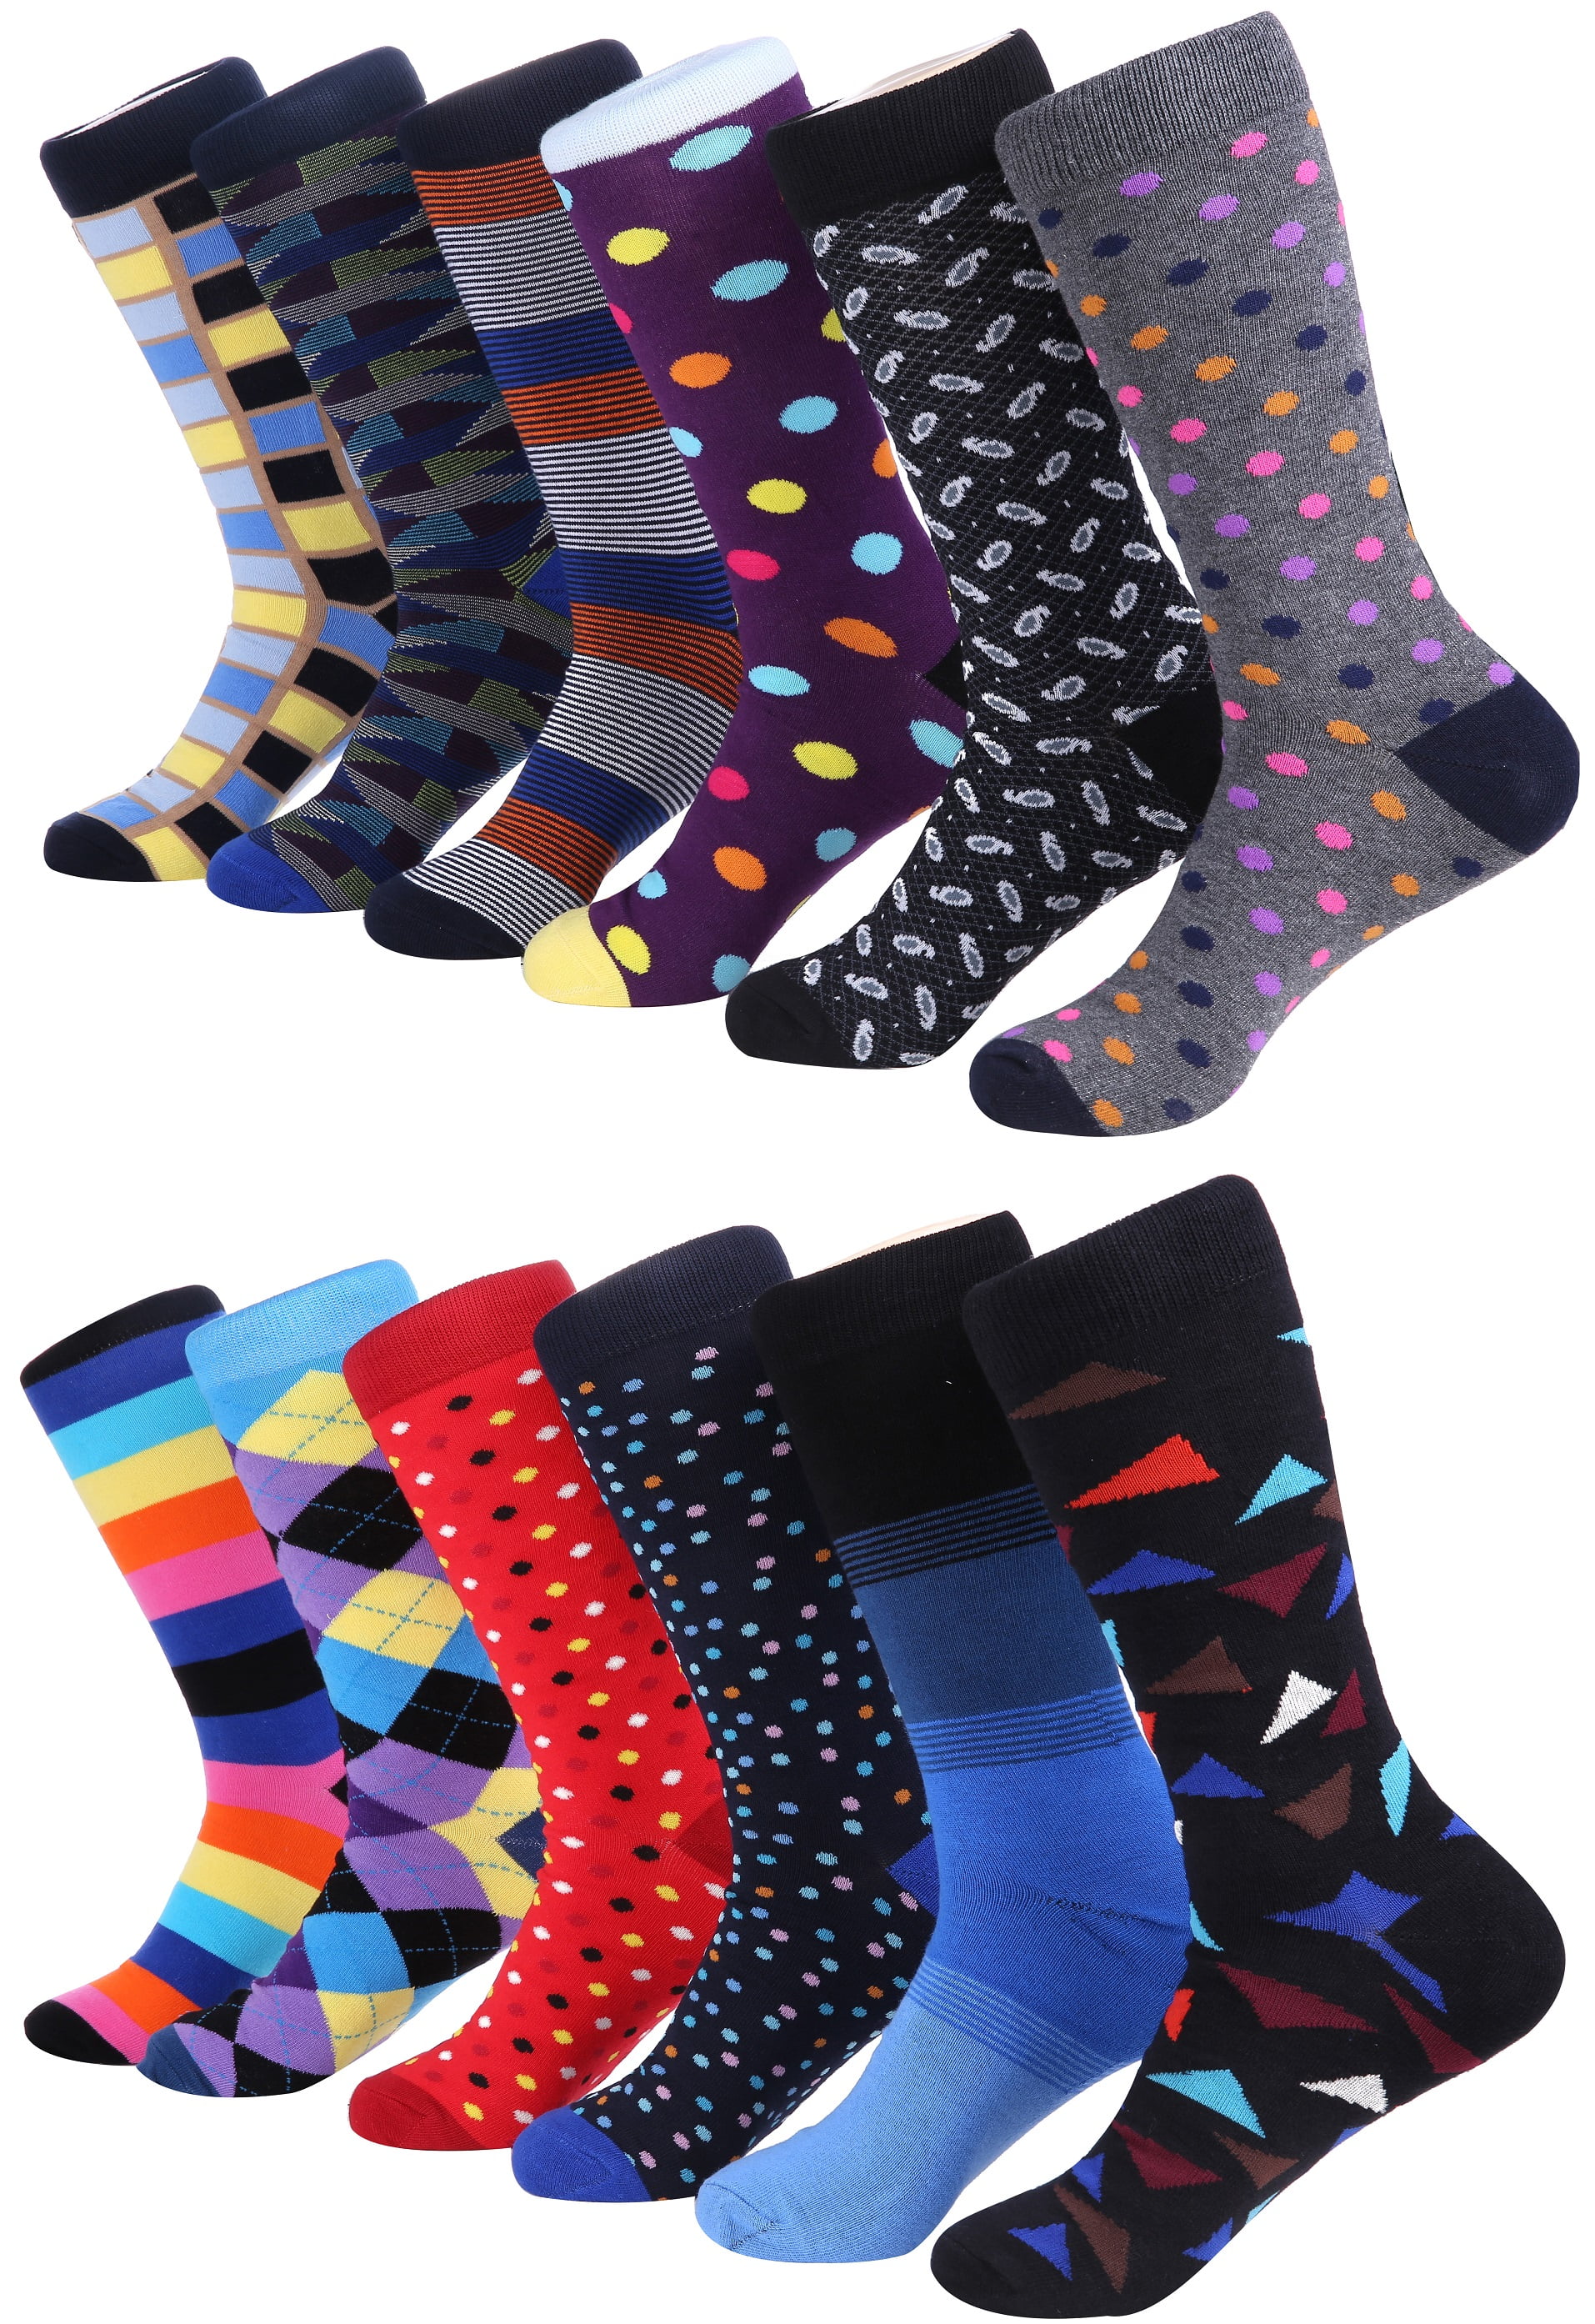 Mens Fun Dress Socks Colorful Funcy Novelty Crazy Fashion Office Crew Socks Pack,Cool Art Casual Cotton Socks